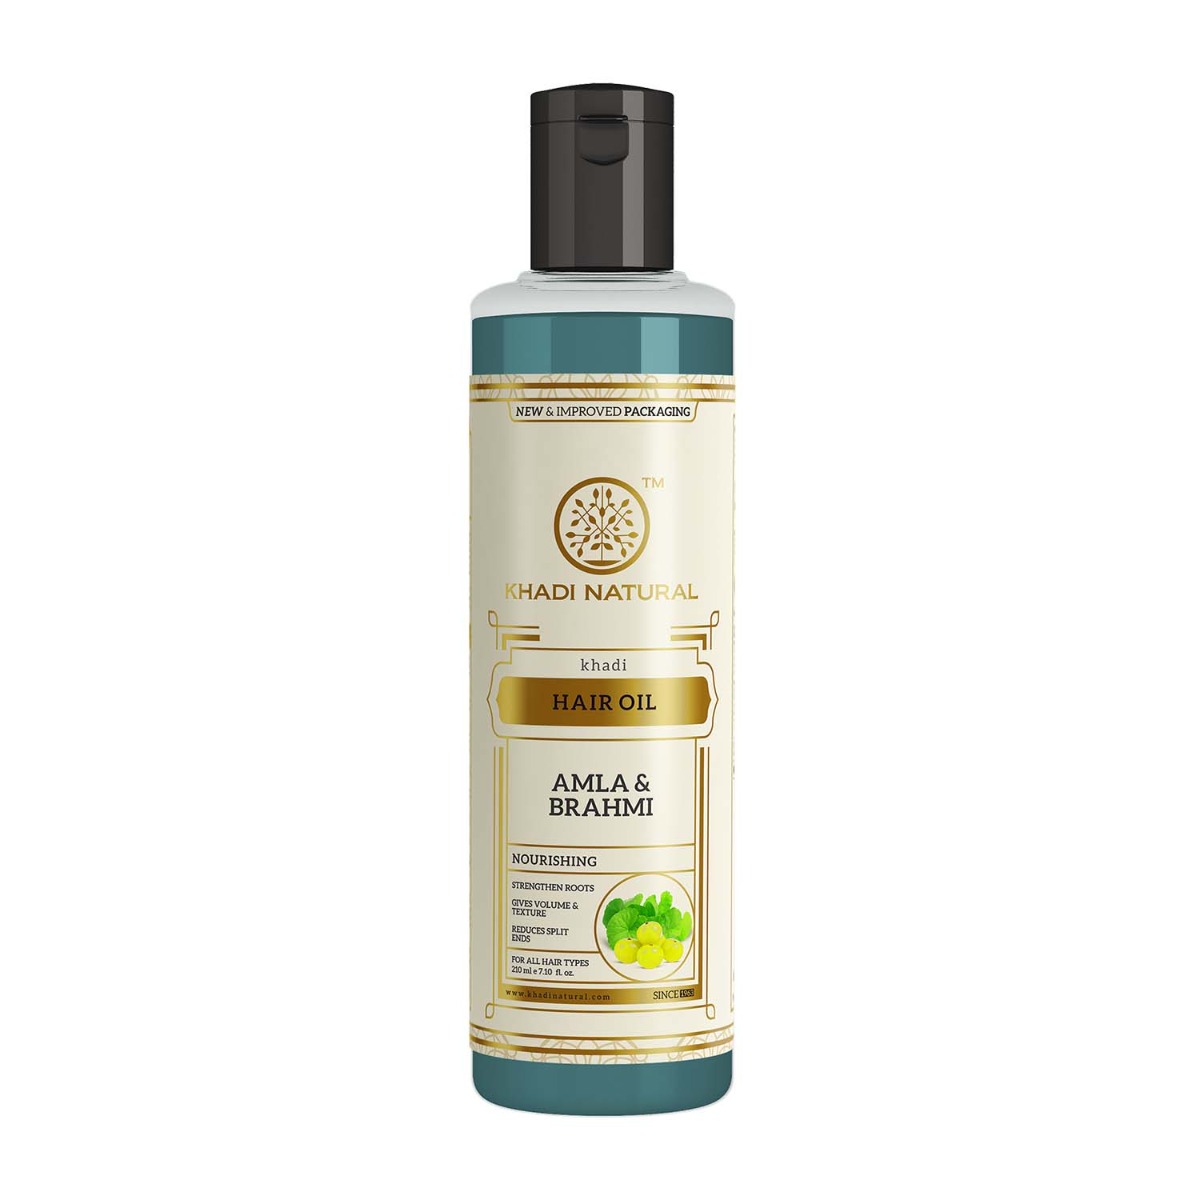 Khadi Natural Amla & Brahmi Hair Oil, 210ml